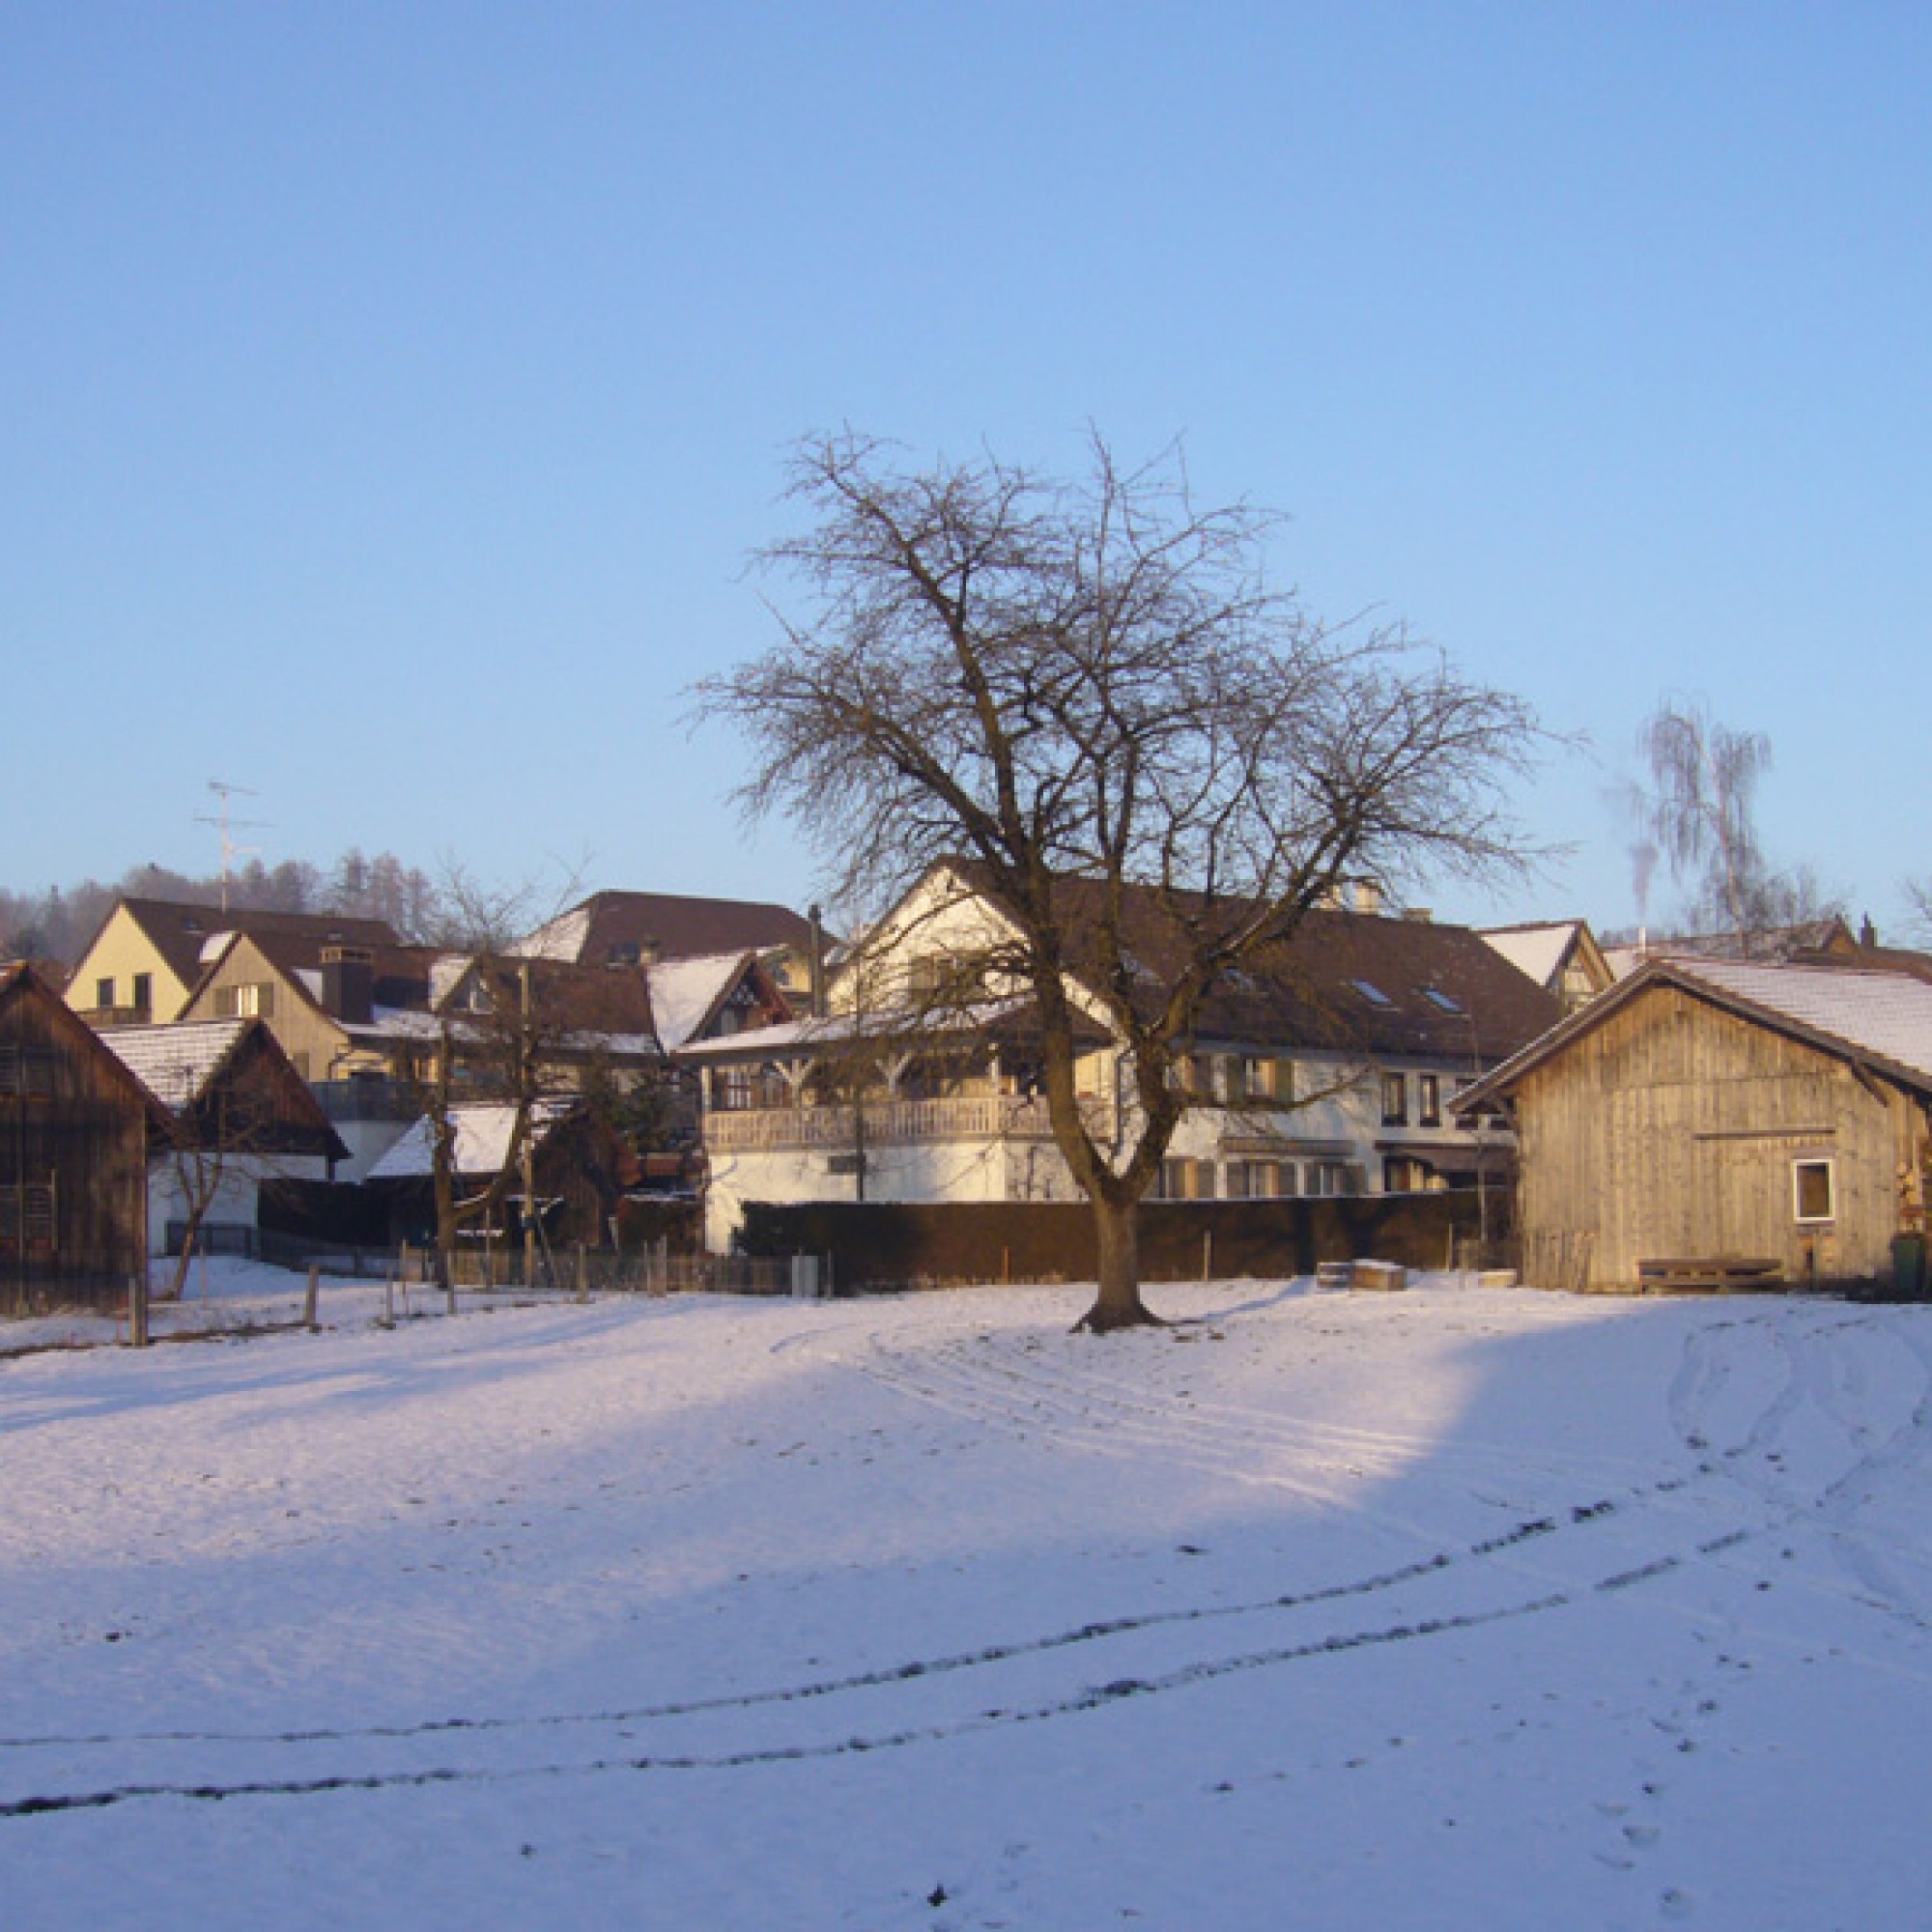 Thundorf im Winter (Abderitestatos, CC BY 3.0, wikimedia.org)